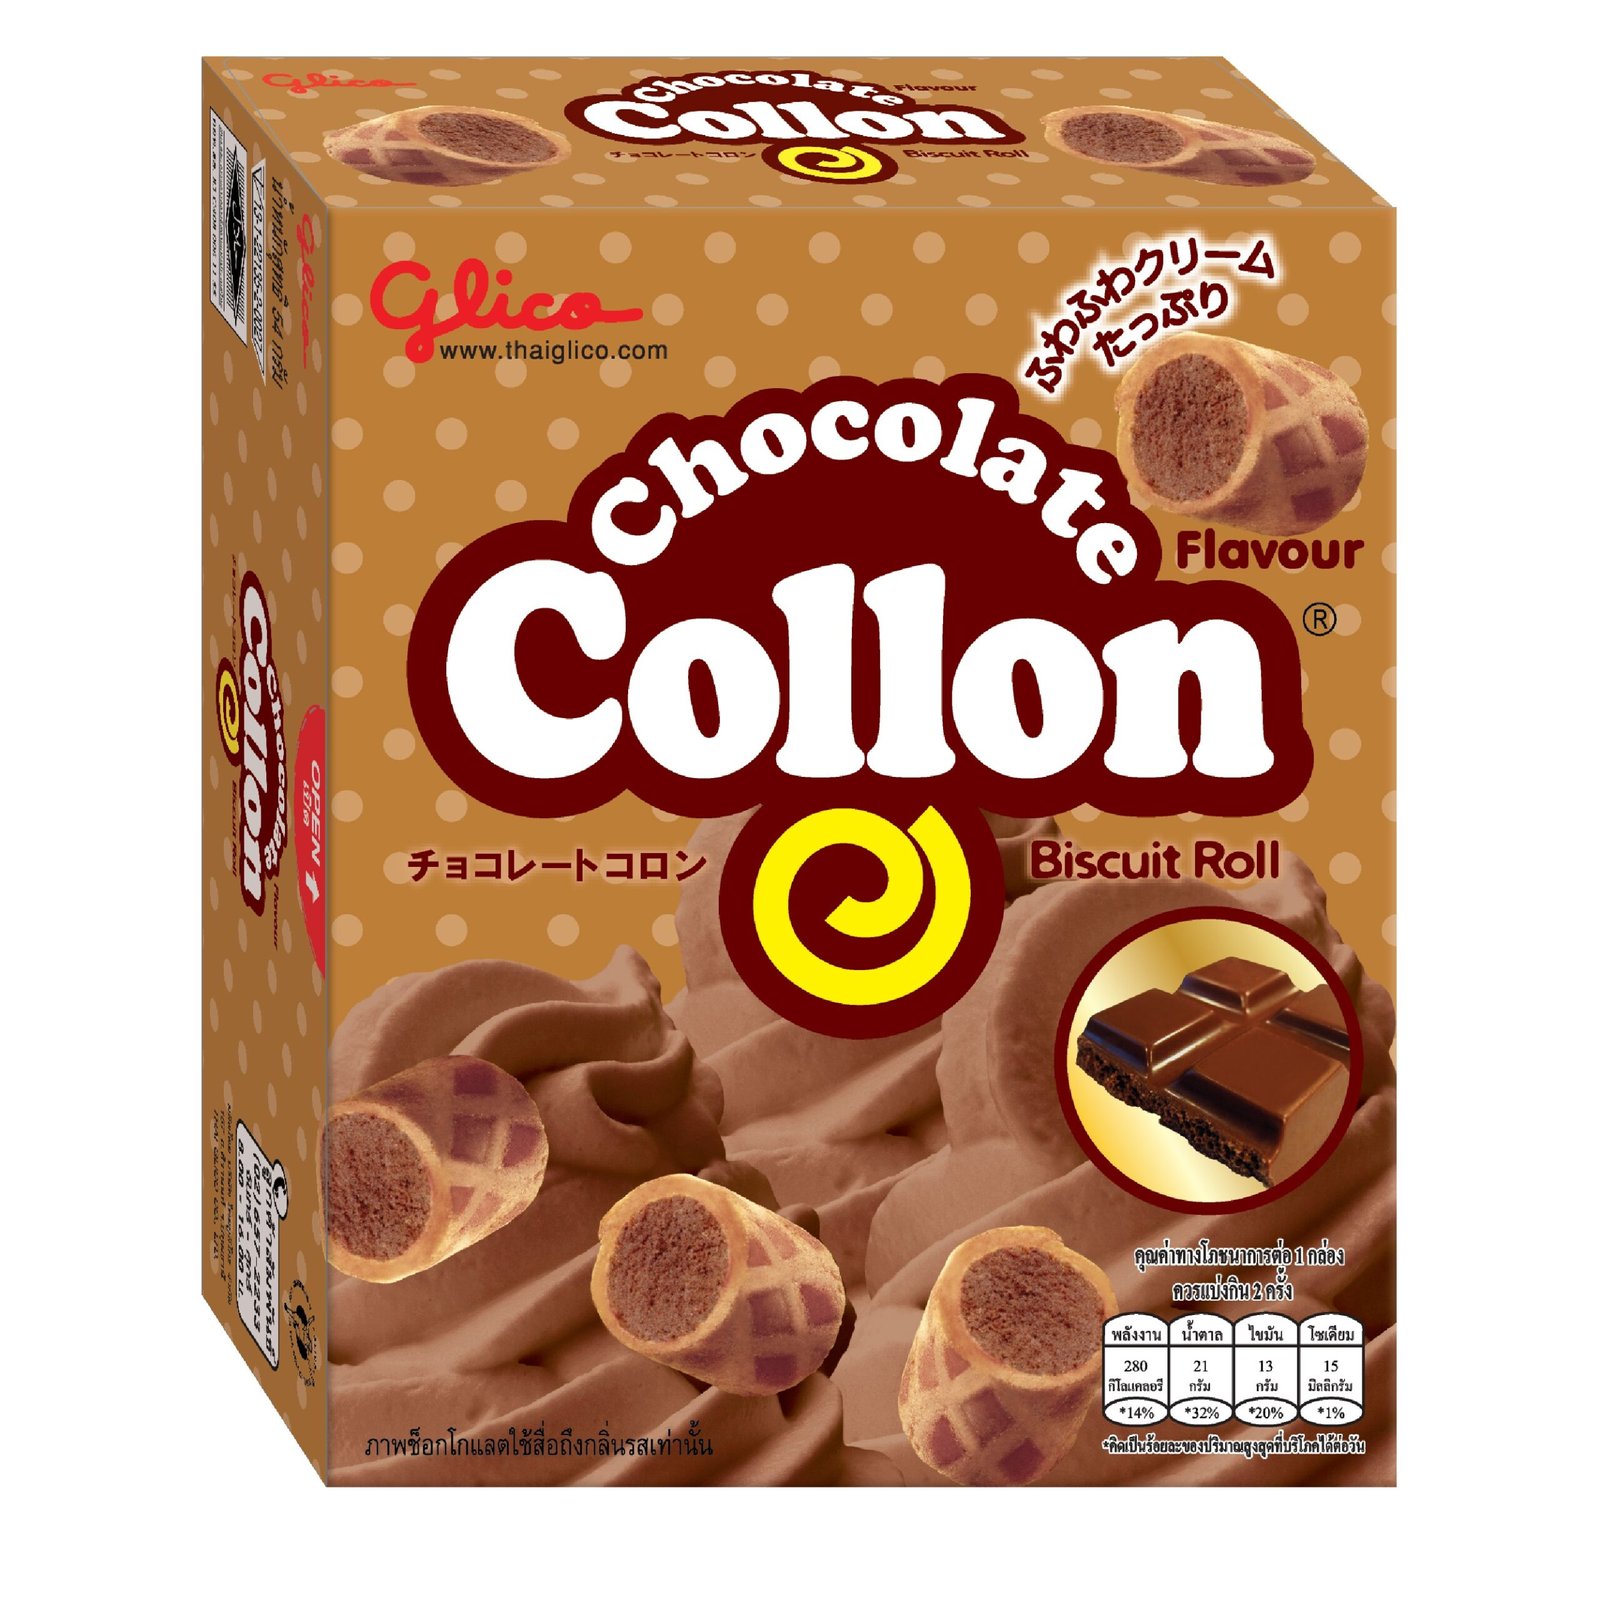 Collon Chocolate Flavour Biscuit Roll 46g โคลลอน รสช็อกโกแลต ตรากูลิโกะ